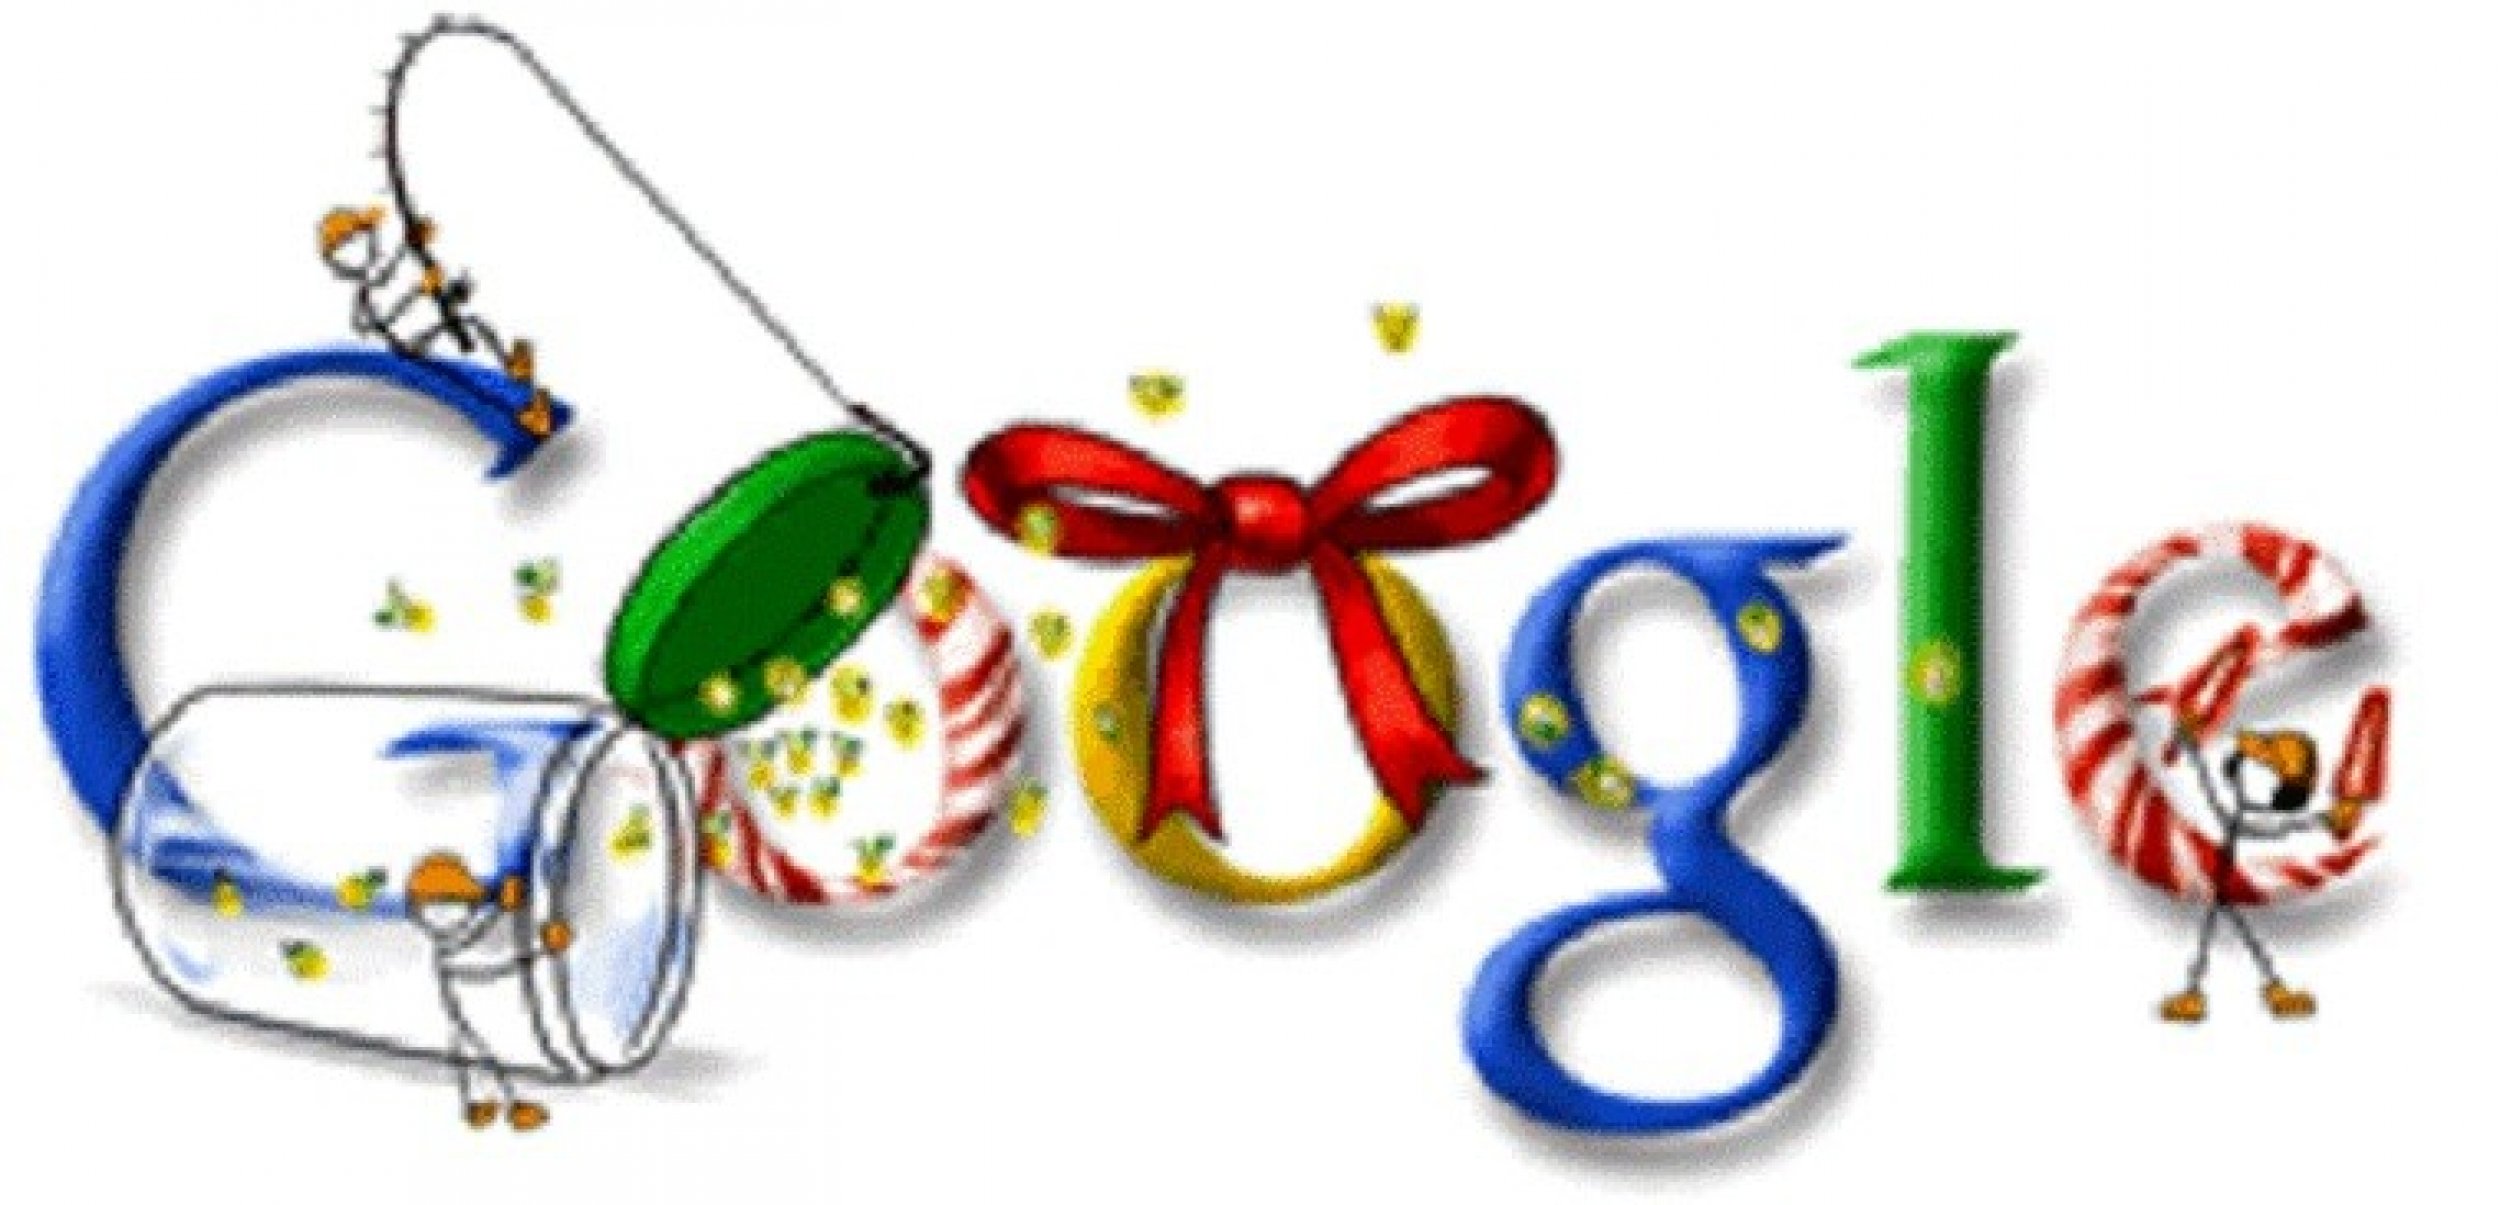 Google Doodle happy holidays 2007